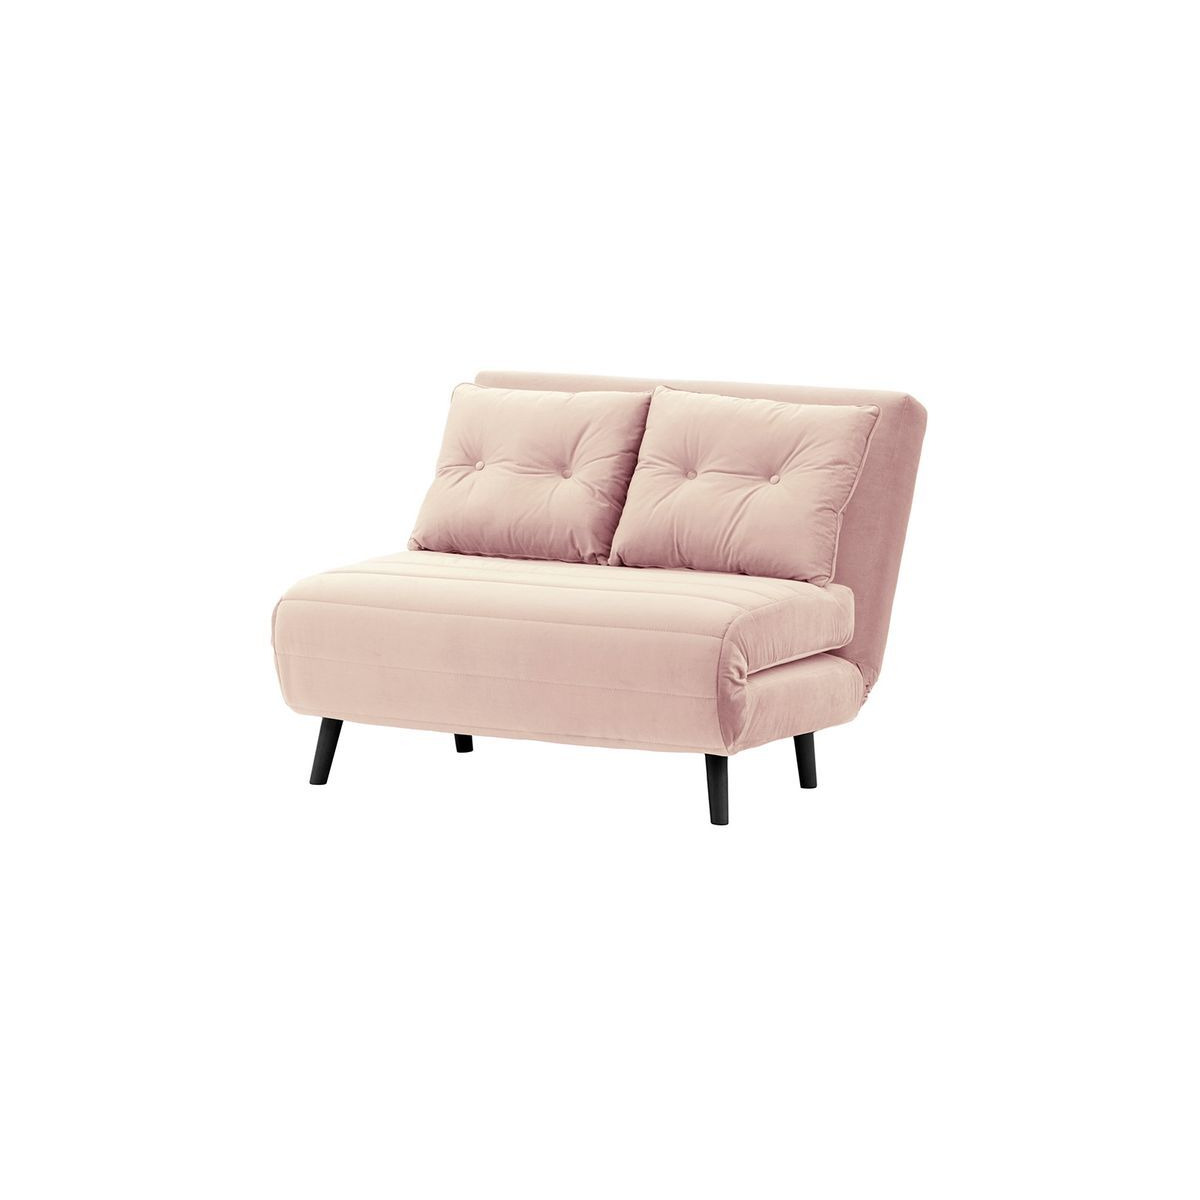 Flic Small Sofa Bed - width 103 cm, lilac, Leg colour: black - image 1